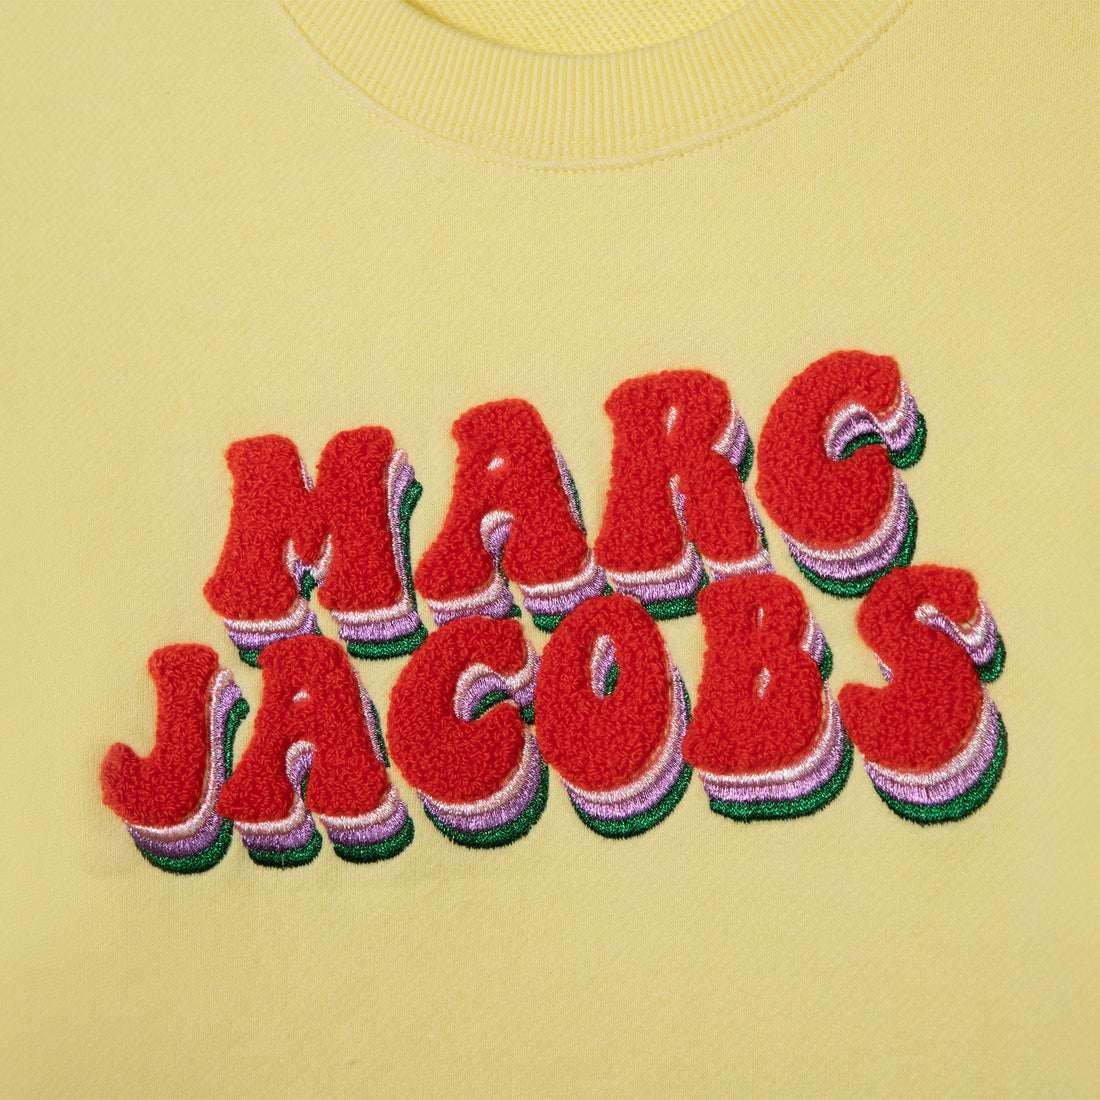 The Marc Jacobs Sweatshirt Style: W15639